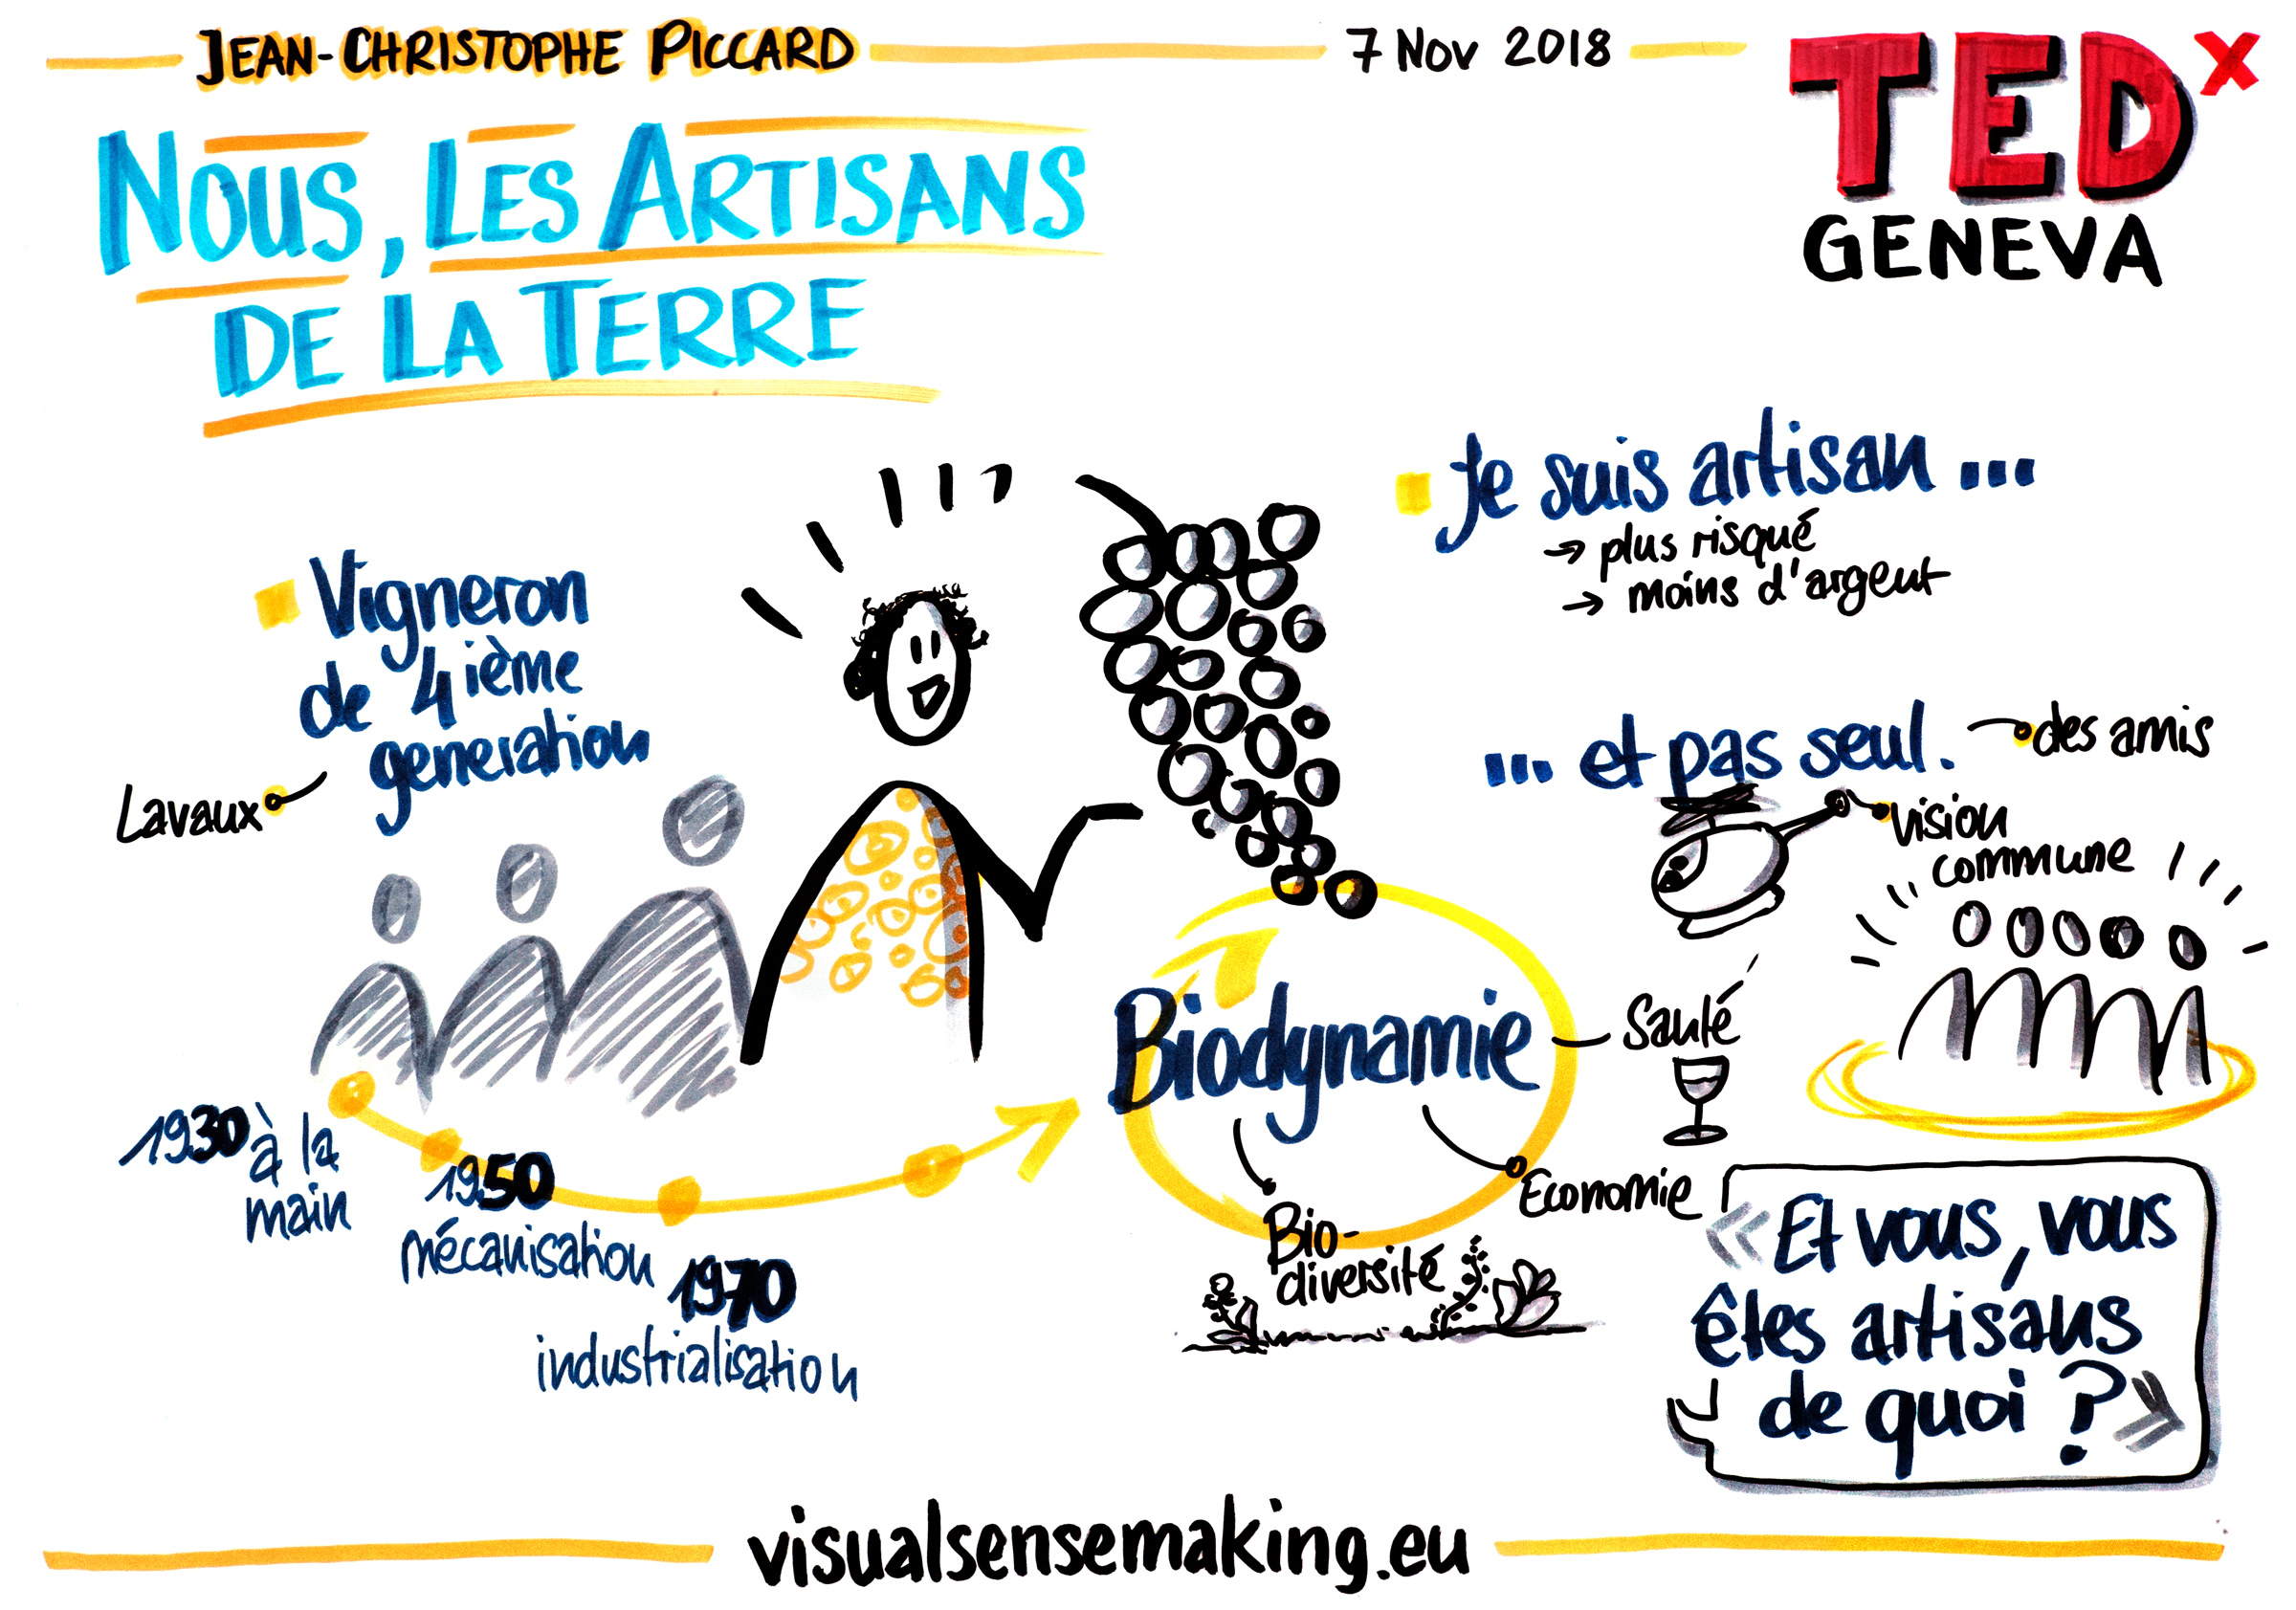 Visual summary of the talk 'Nous, les artisans de la terre'